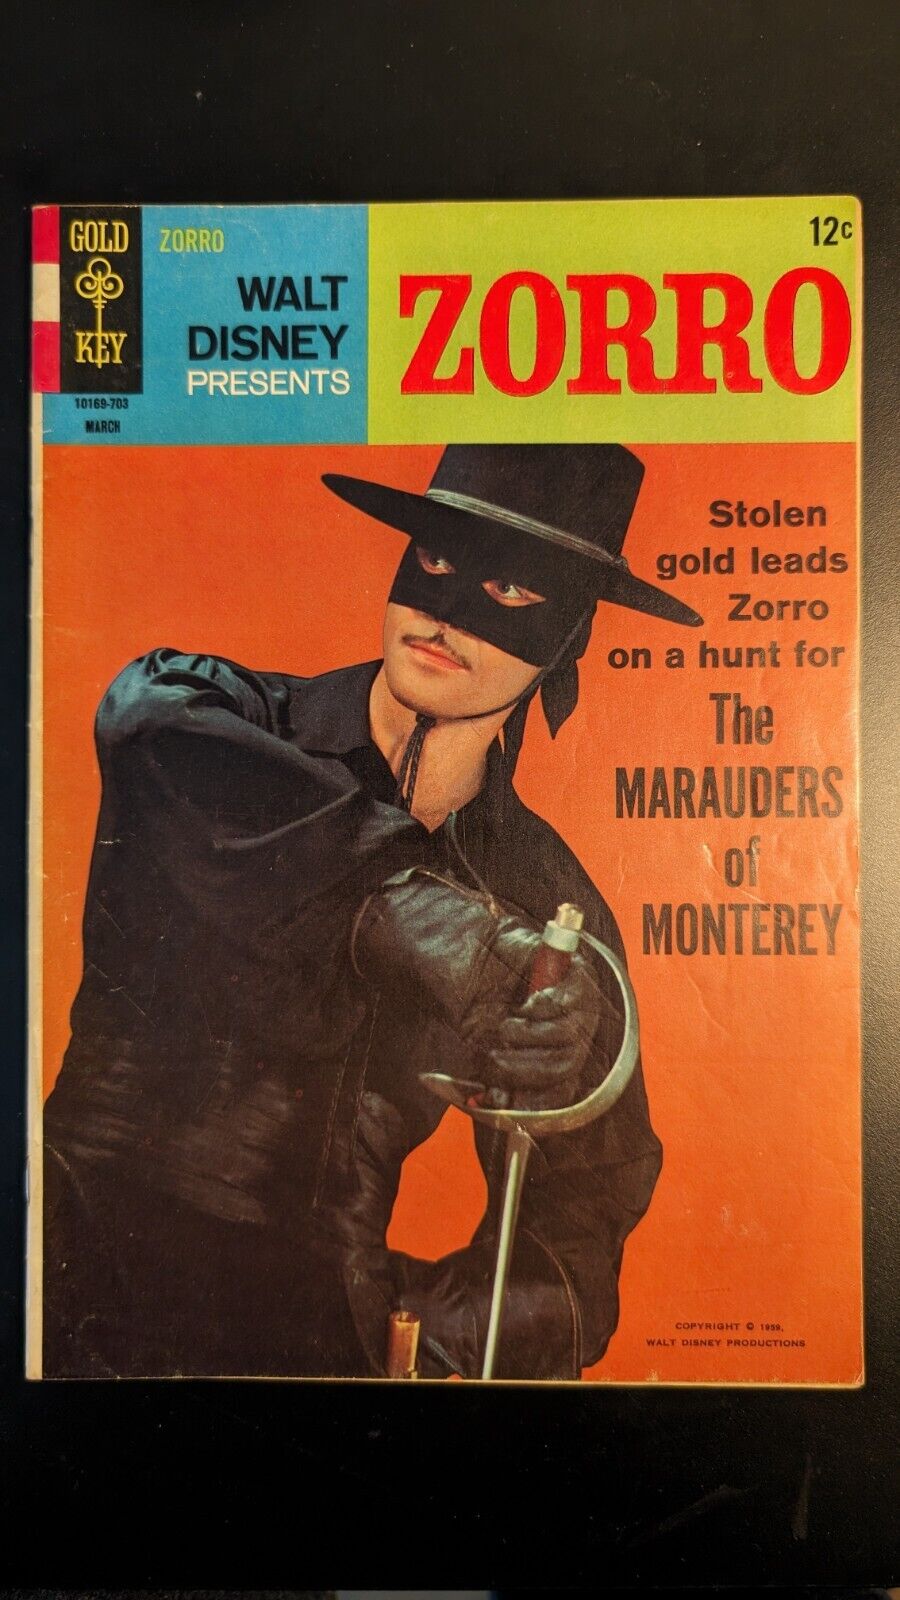 Zorro #5 - The Marauders of Monterey (Gold Key, 1966) VF+ 